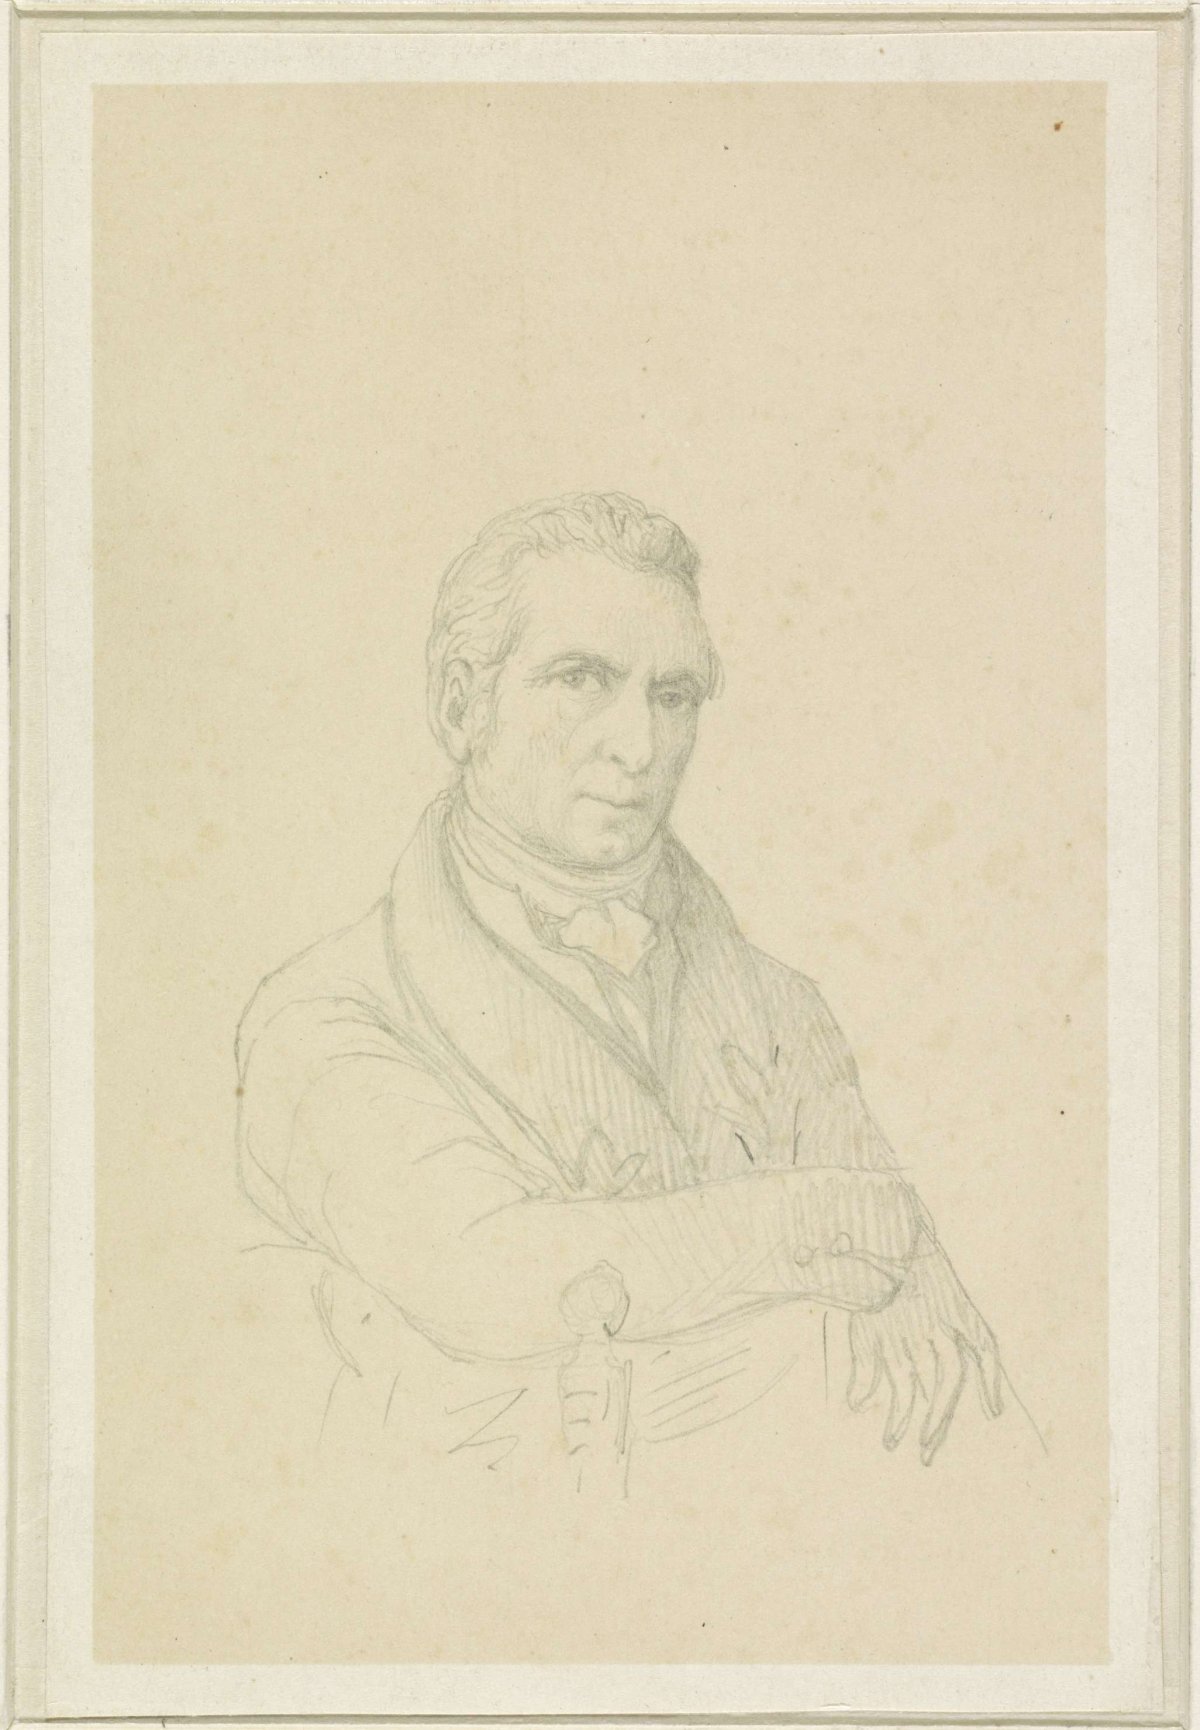 Portrait of Johannes Jelgerhuis Rienksz., Johannes Jelgerhuis, 1830 - 1836